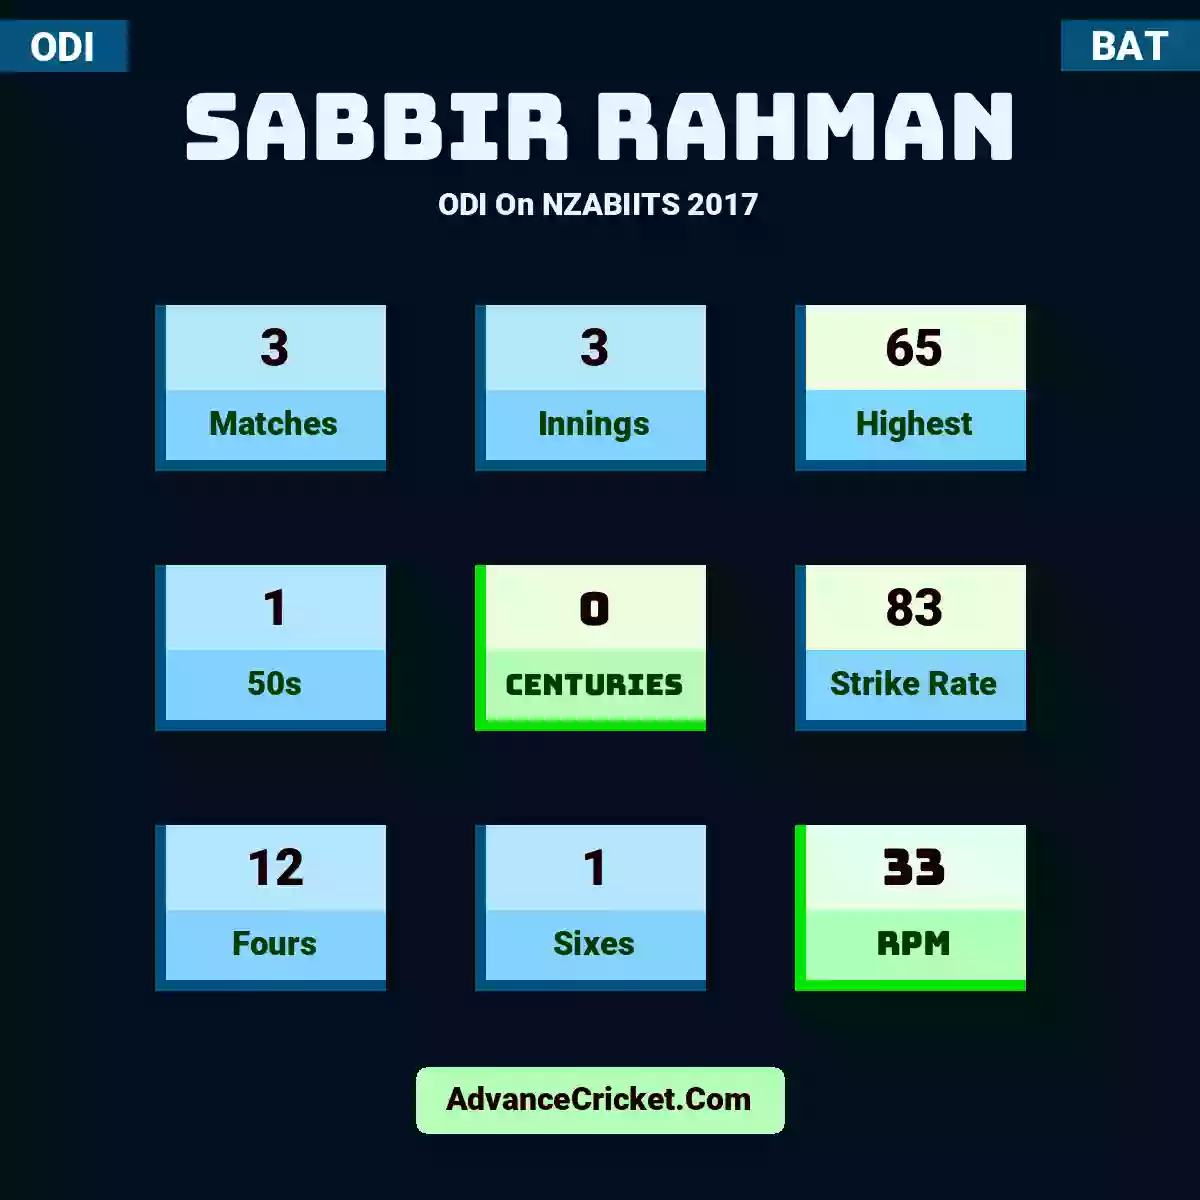 Sabbir Rahman ODI  On NZABIITS 2017, Sabbir Rahman played 3 matches, scored 65 runs as highest, 1 half-centuries, and 0 centuries, with a strike rate of 83. S.Rahman hit 12 fours and 1 sixes, with an RPM of 33.